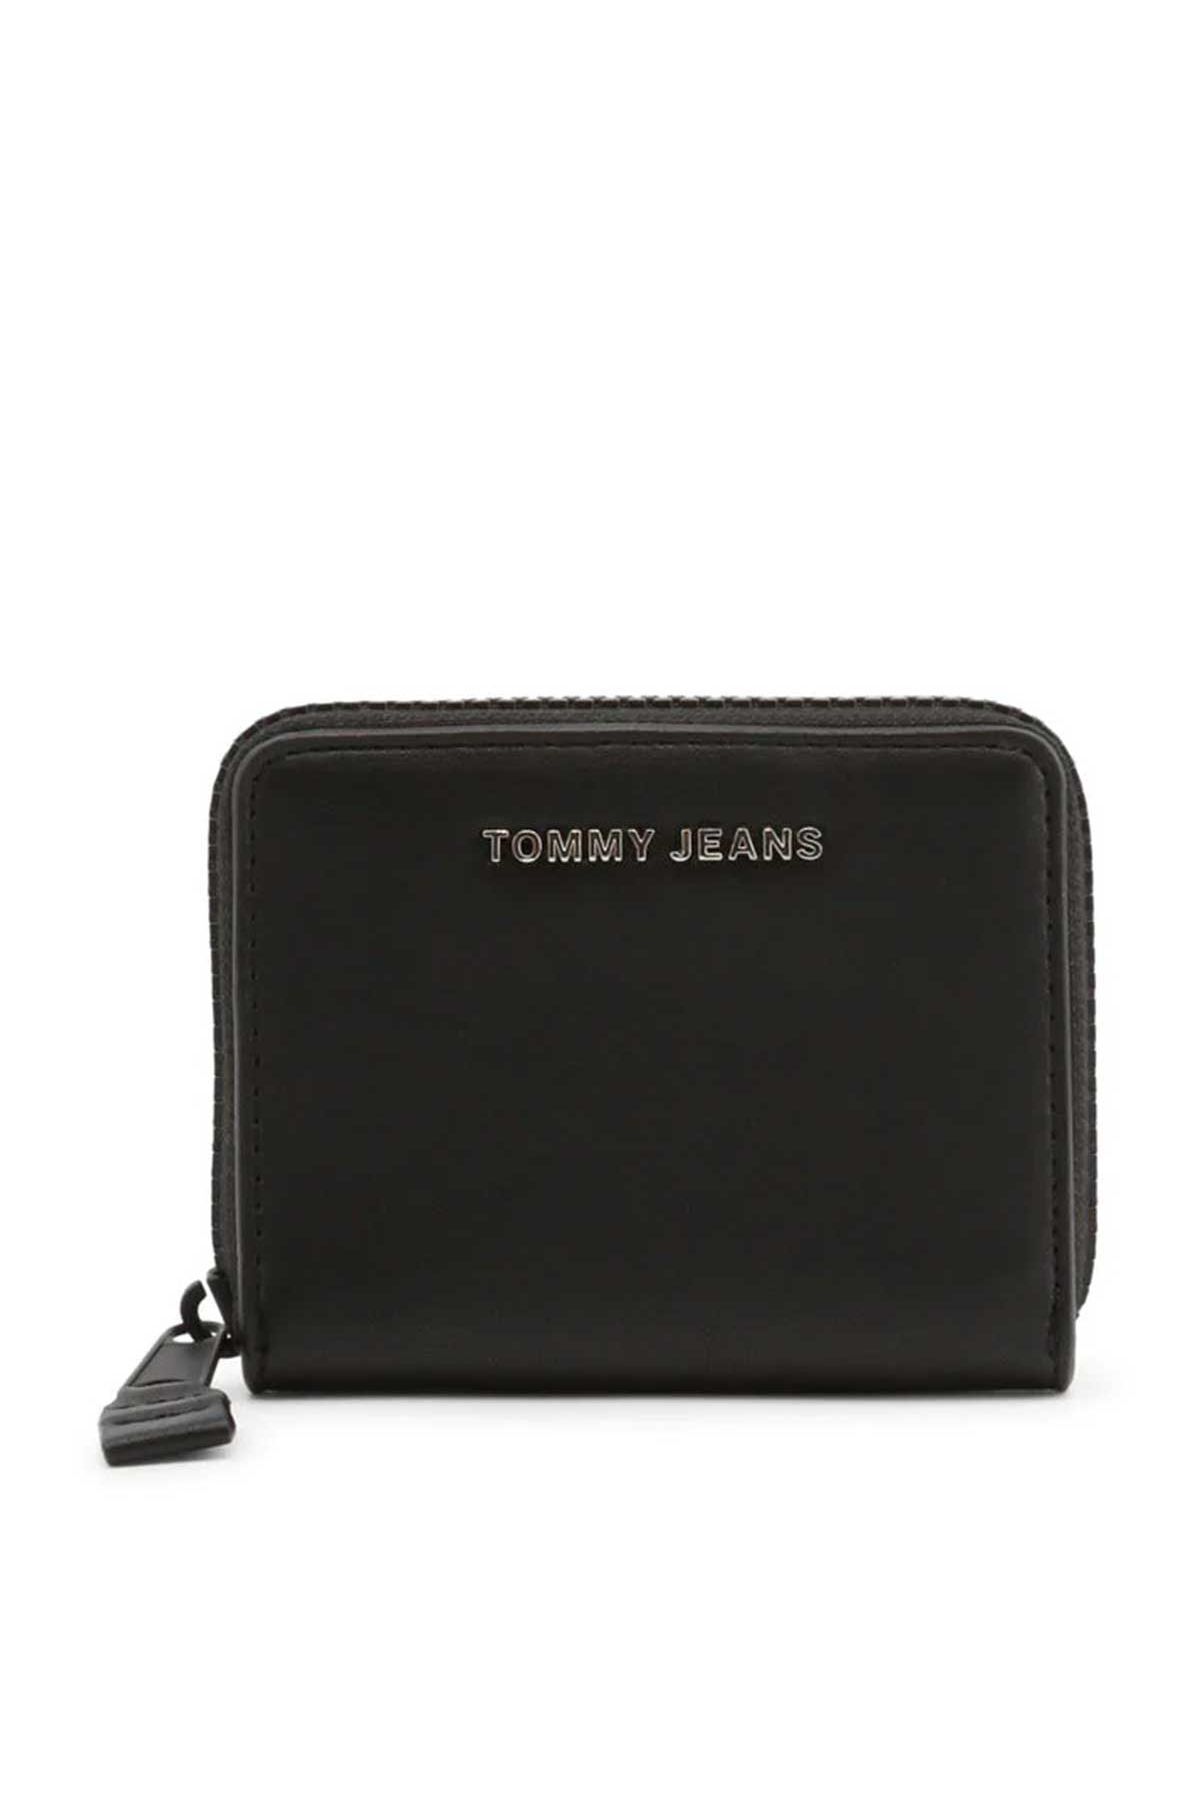 Tommy Hilfiger Kadın Small Leather Goods Kadın Cüzdanı Aw0aw11848